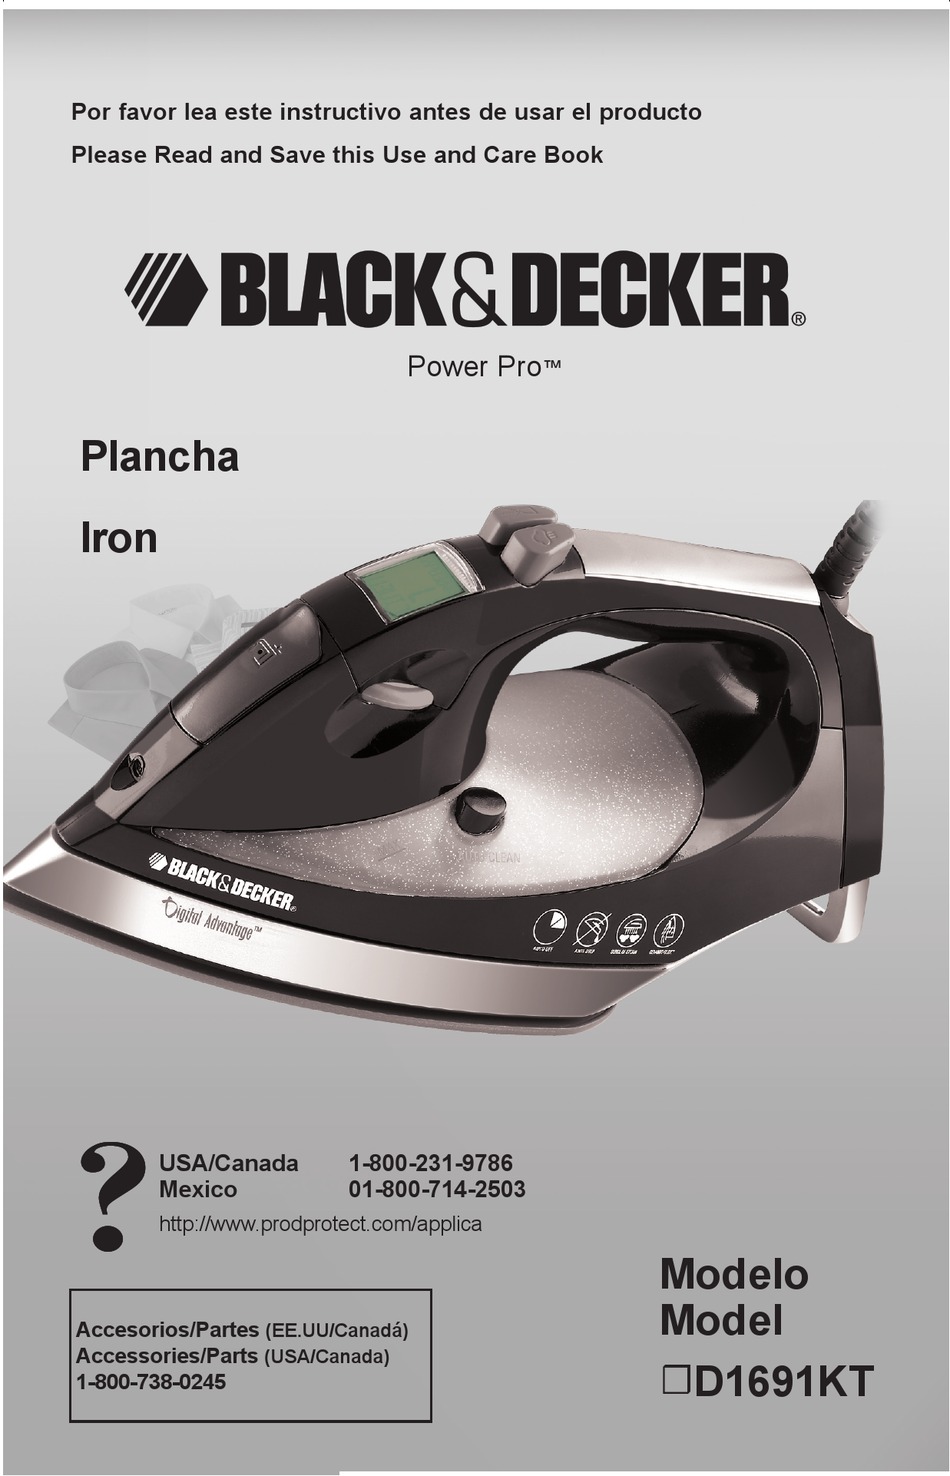 BLACK+DECKER Digital Advantage Professional Steam Iron, D2530